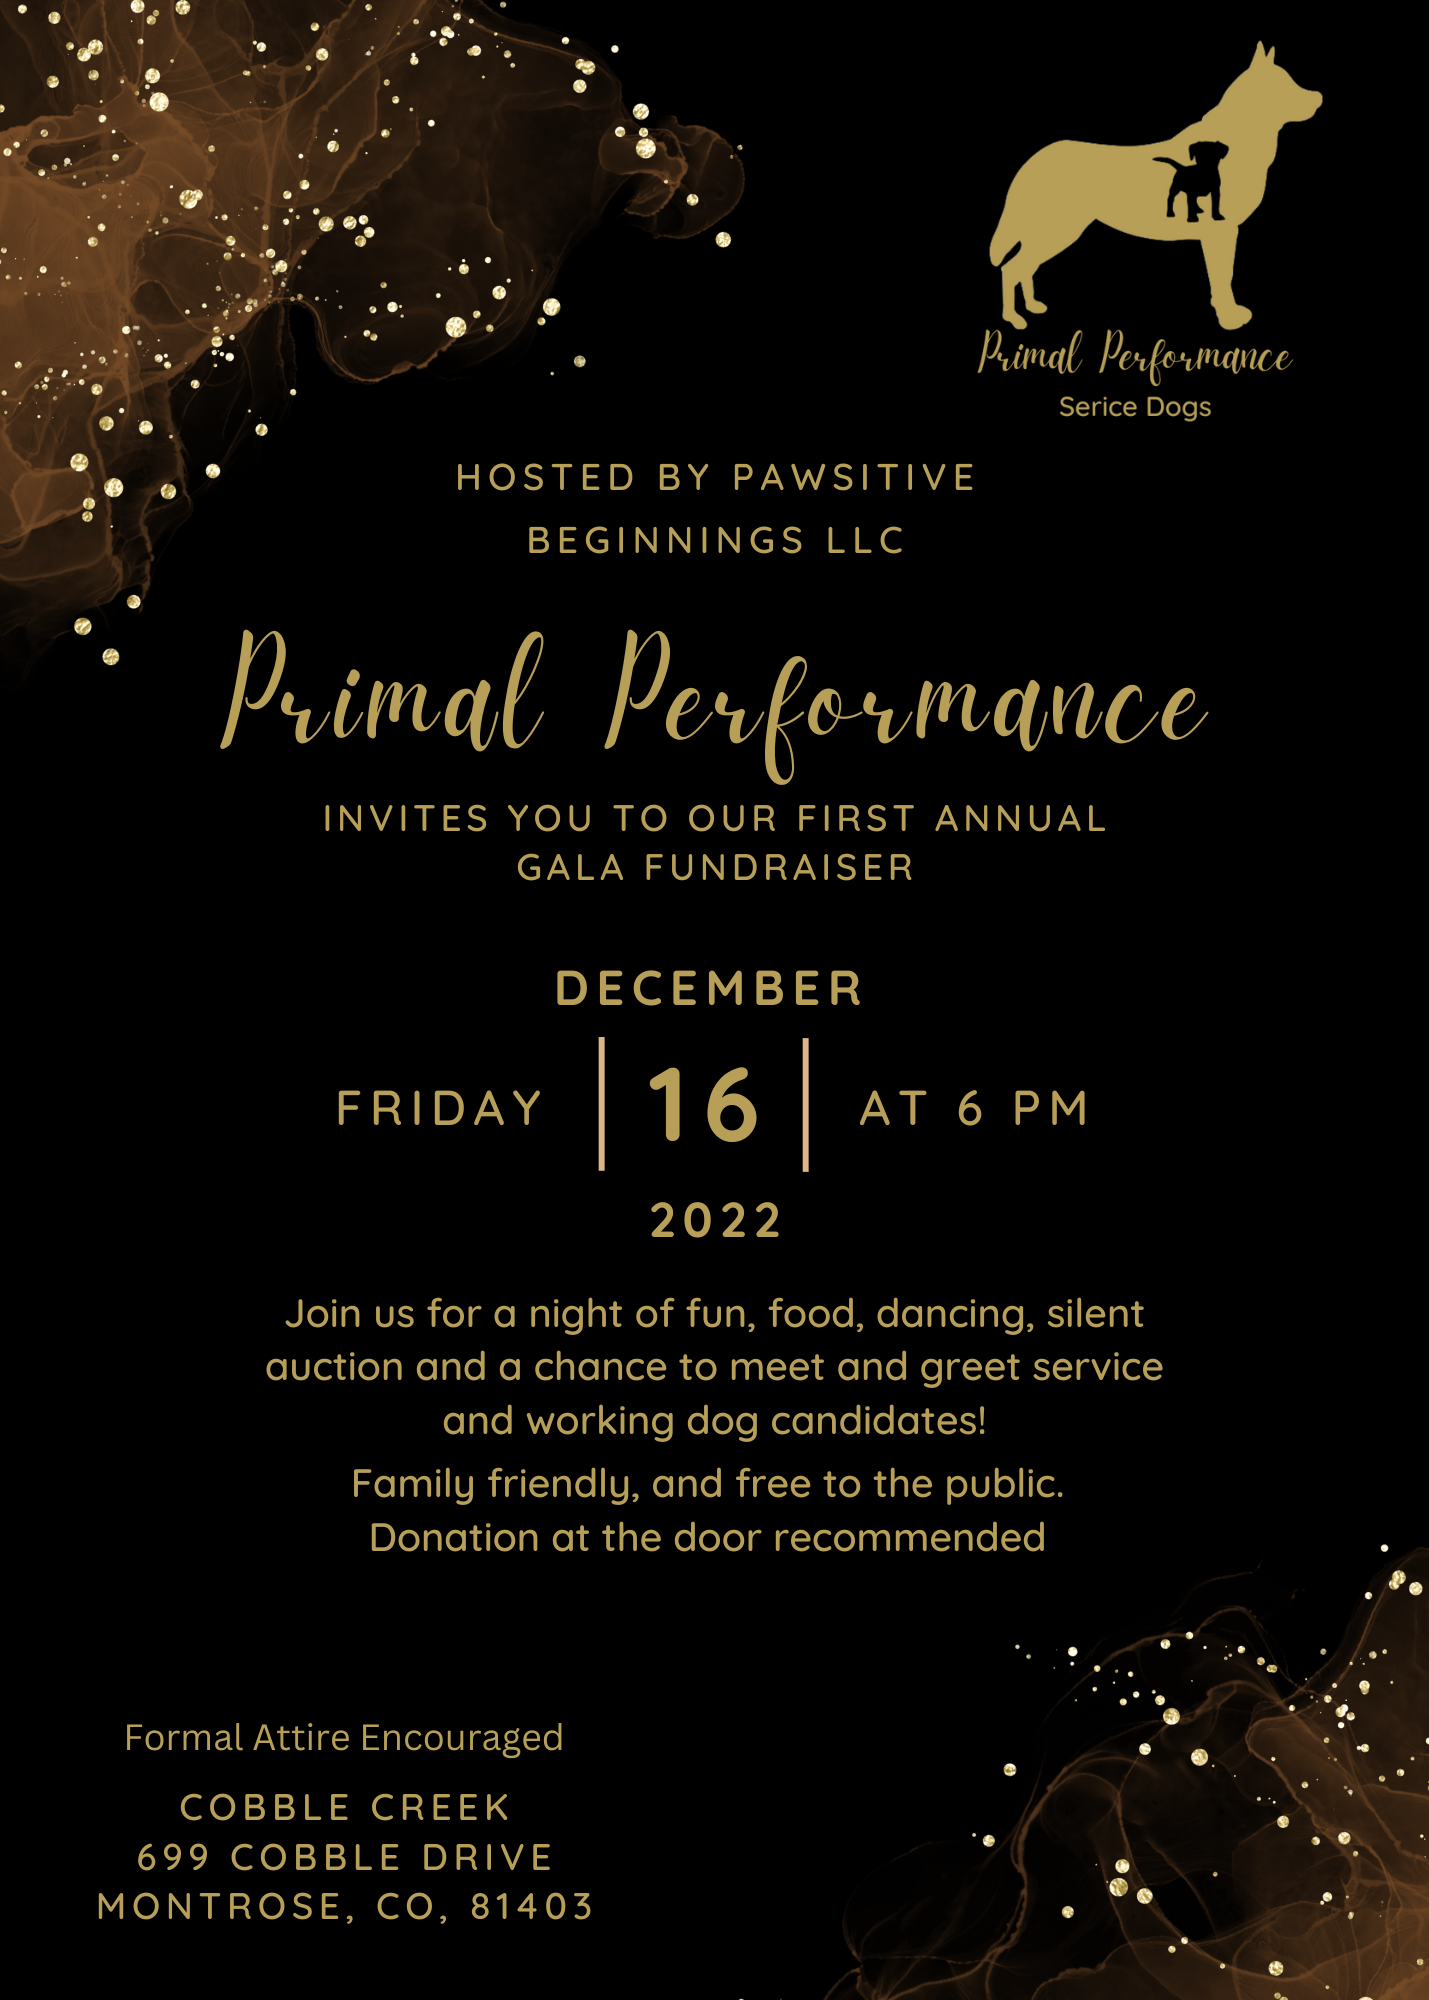 service dog fundraiser gala invite primal performance montrose co